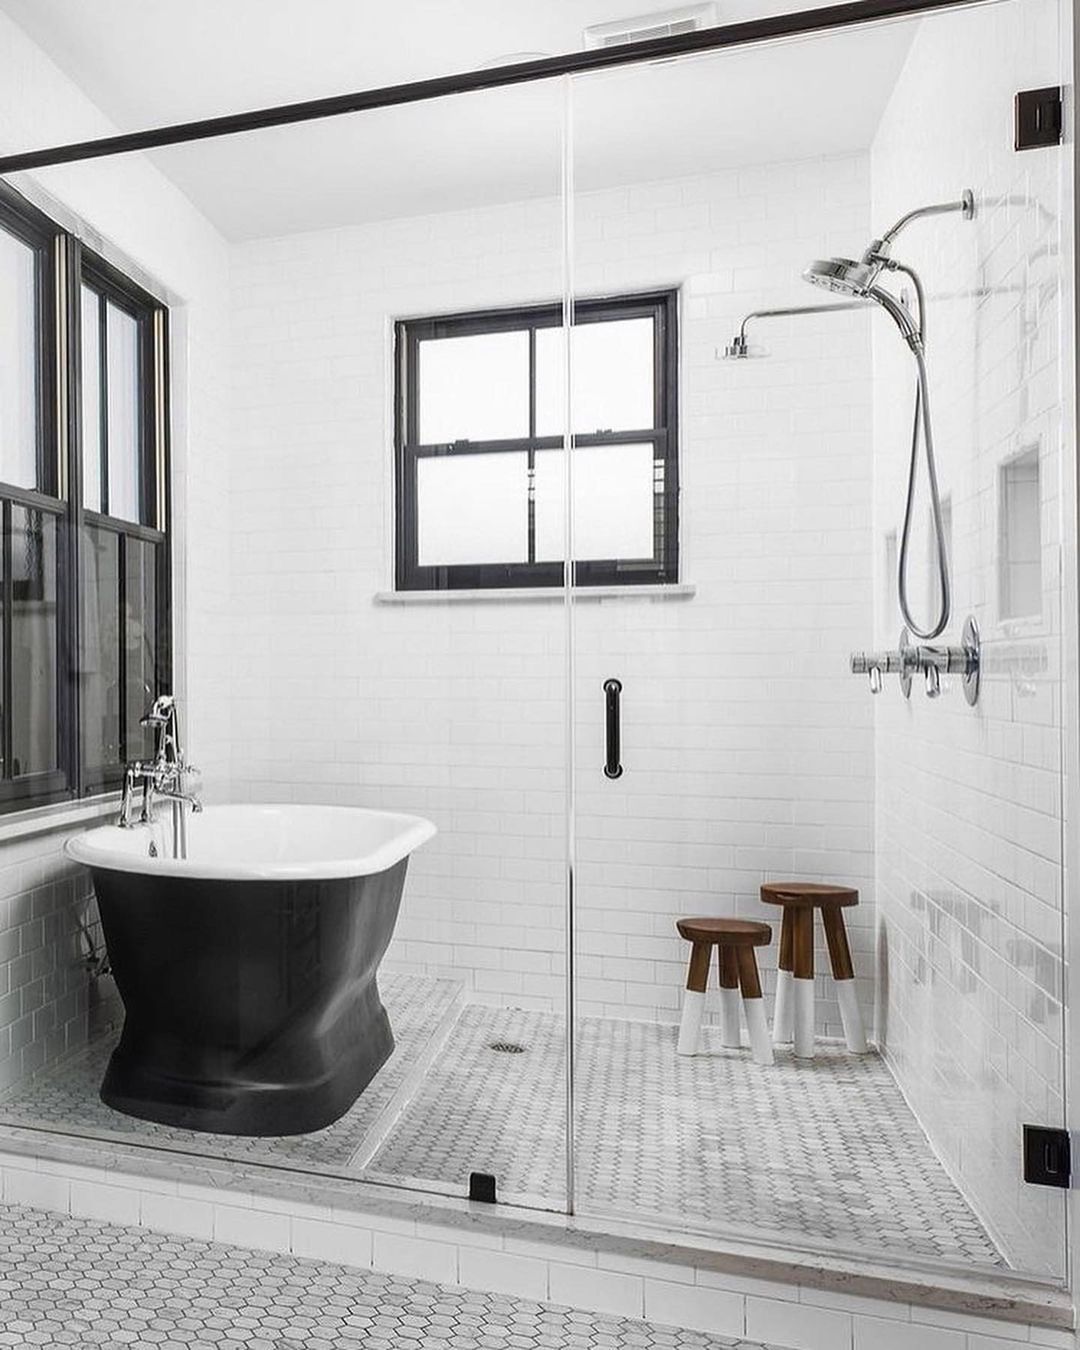 Aesthetic black theme bathroom decor ideas with amazing shower